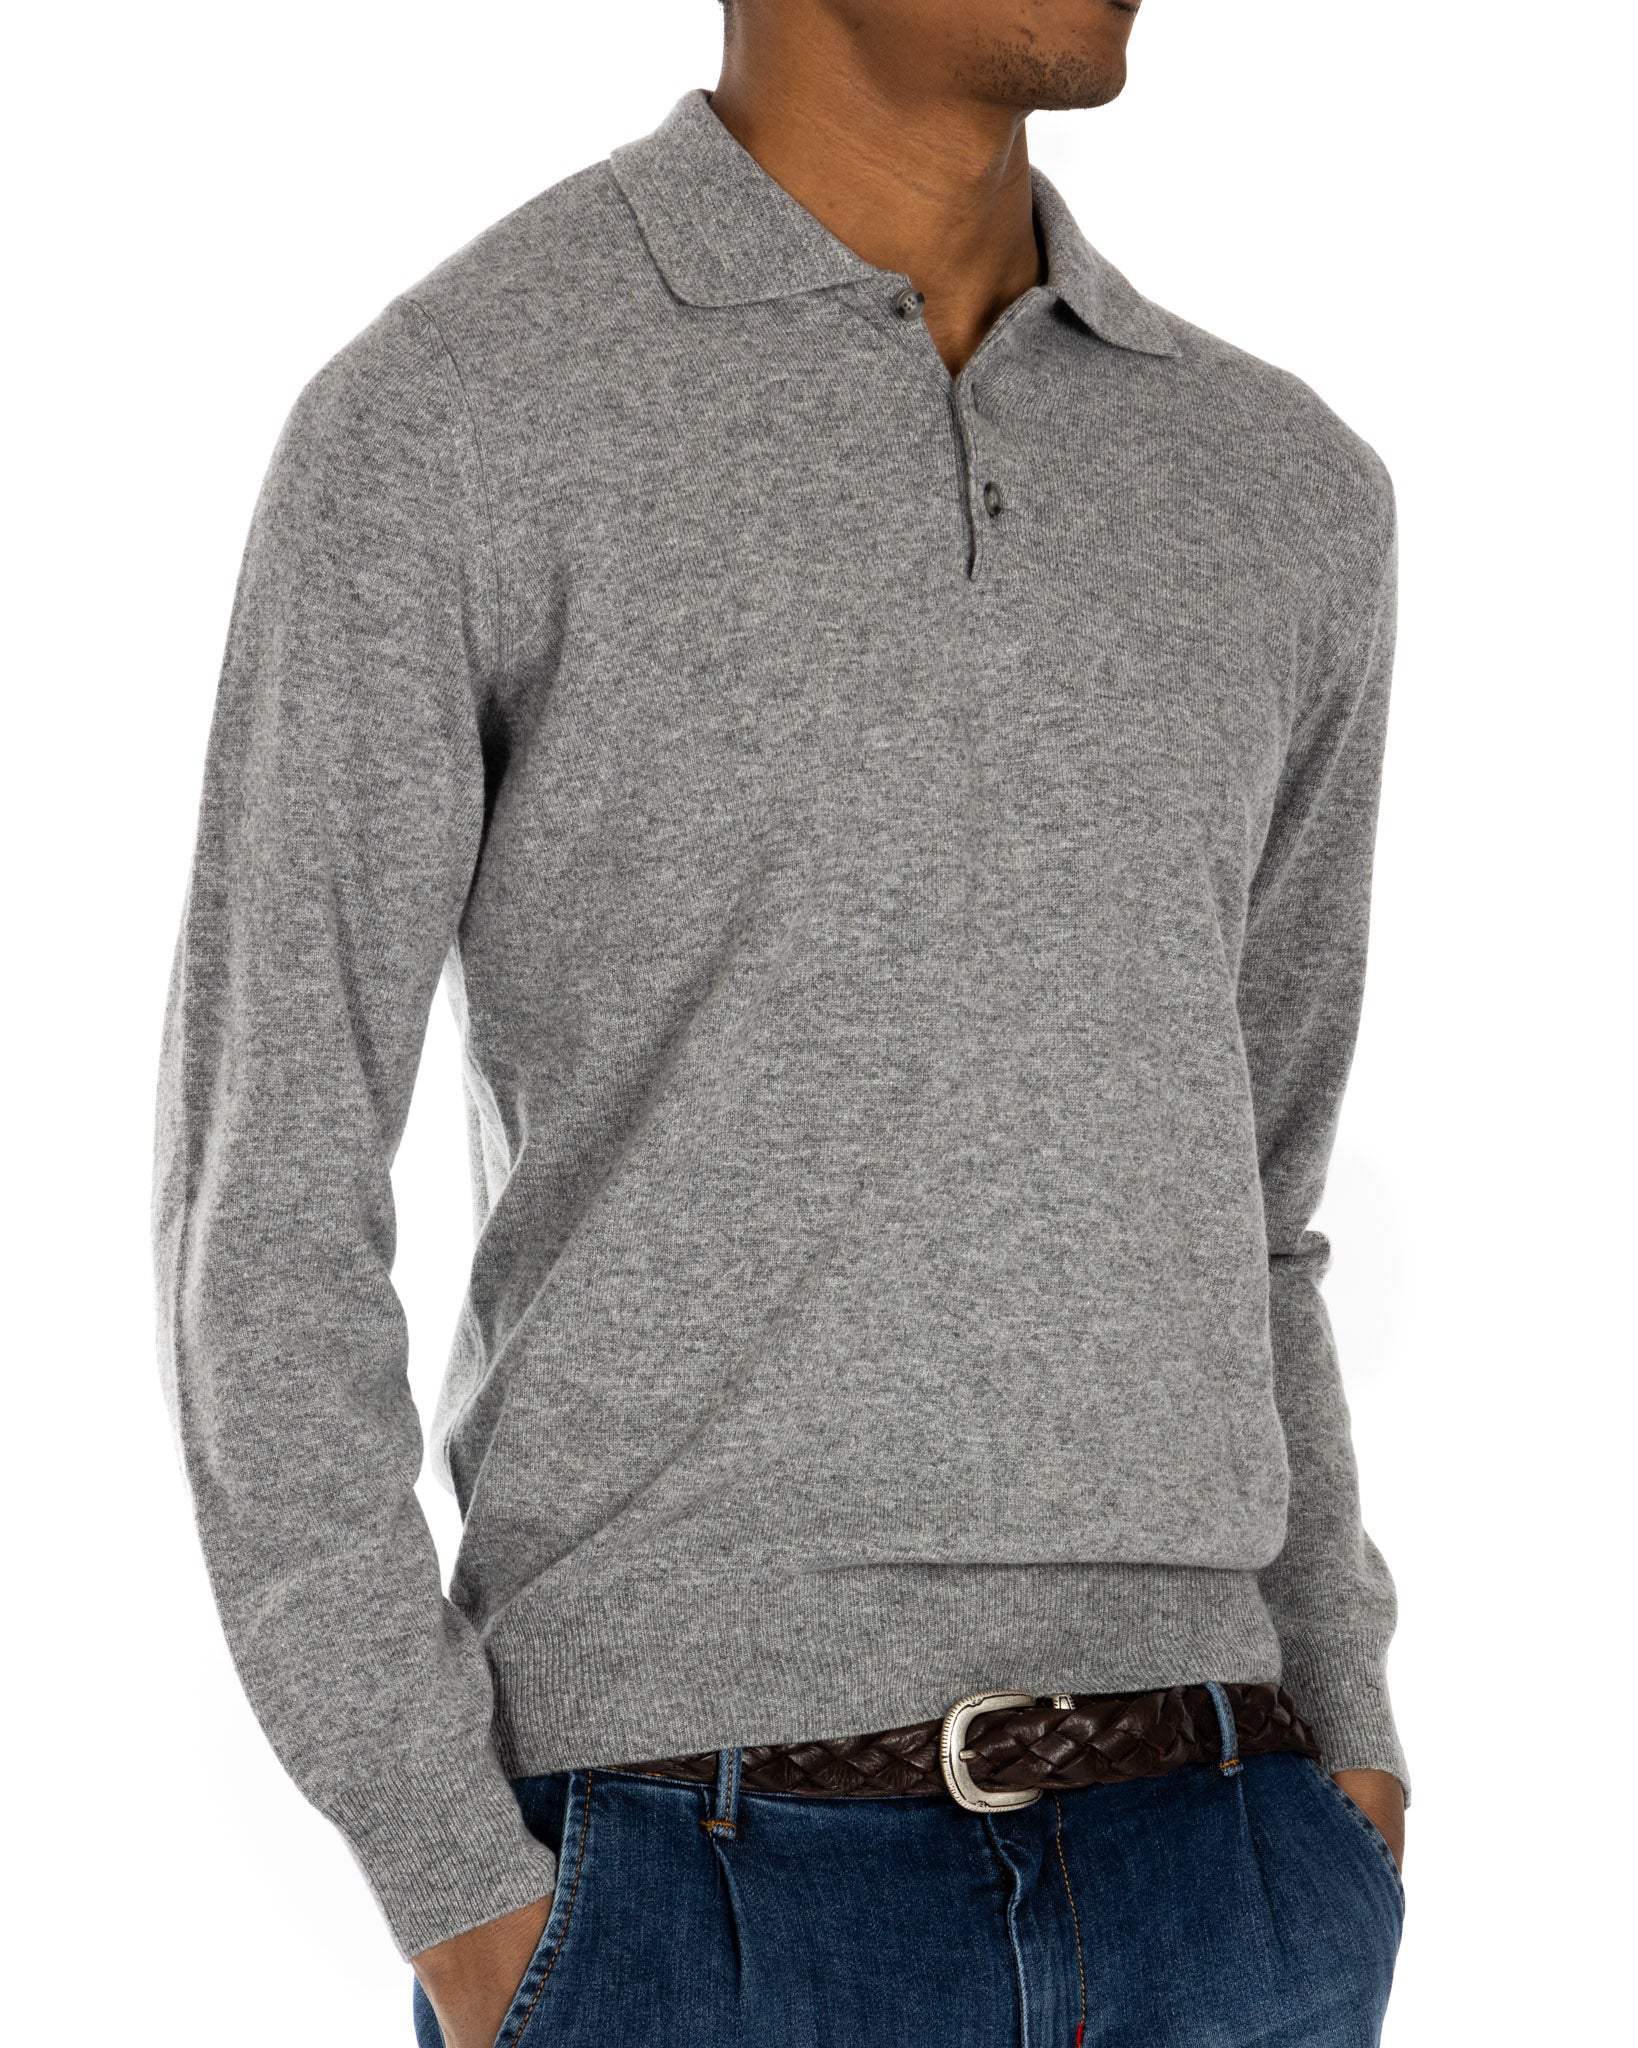 Tiger - gray cashmere blend polo shirt